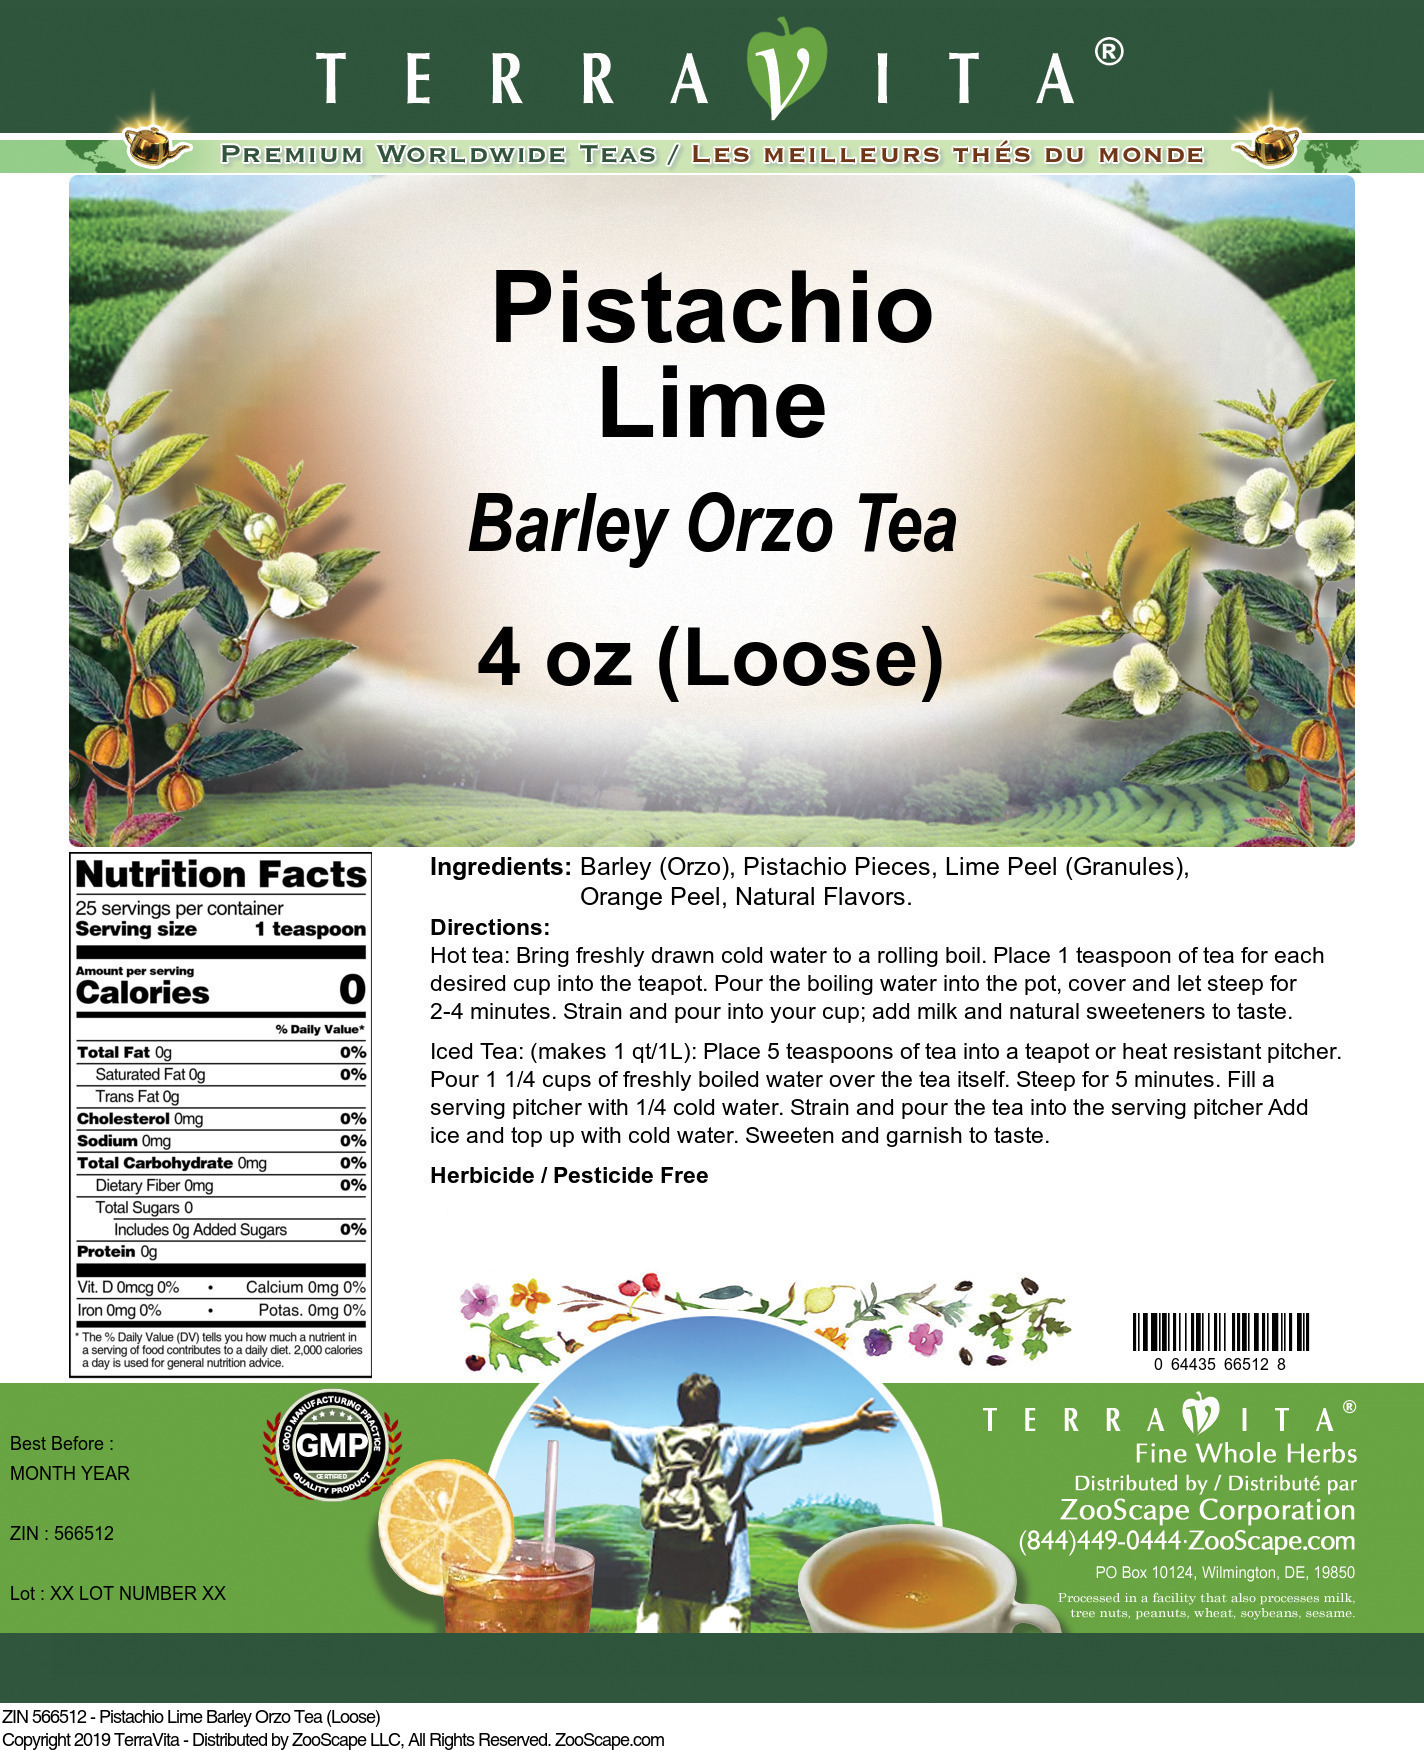 Pistachio Lime Barley Orzo Tea (Loose) - Label